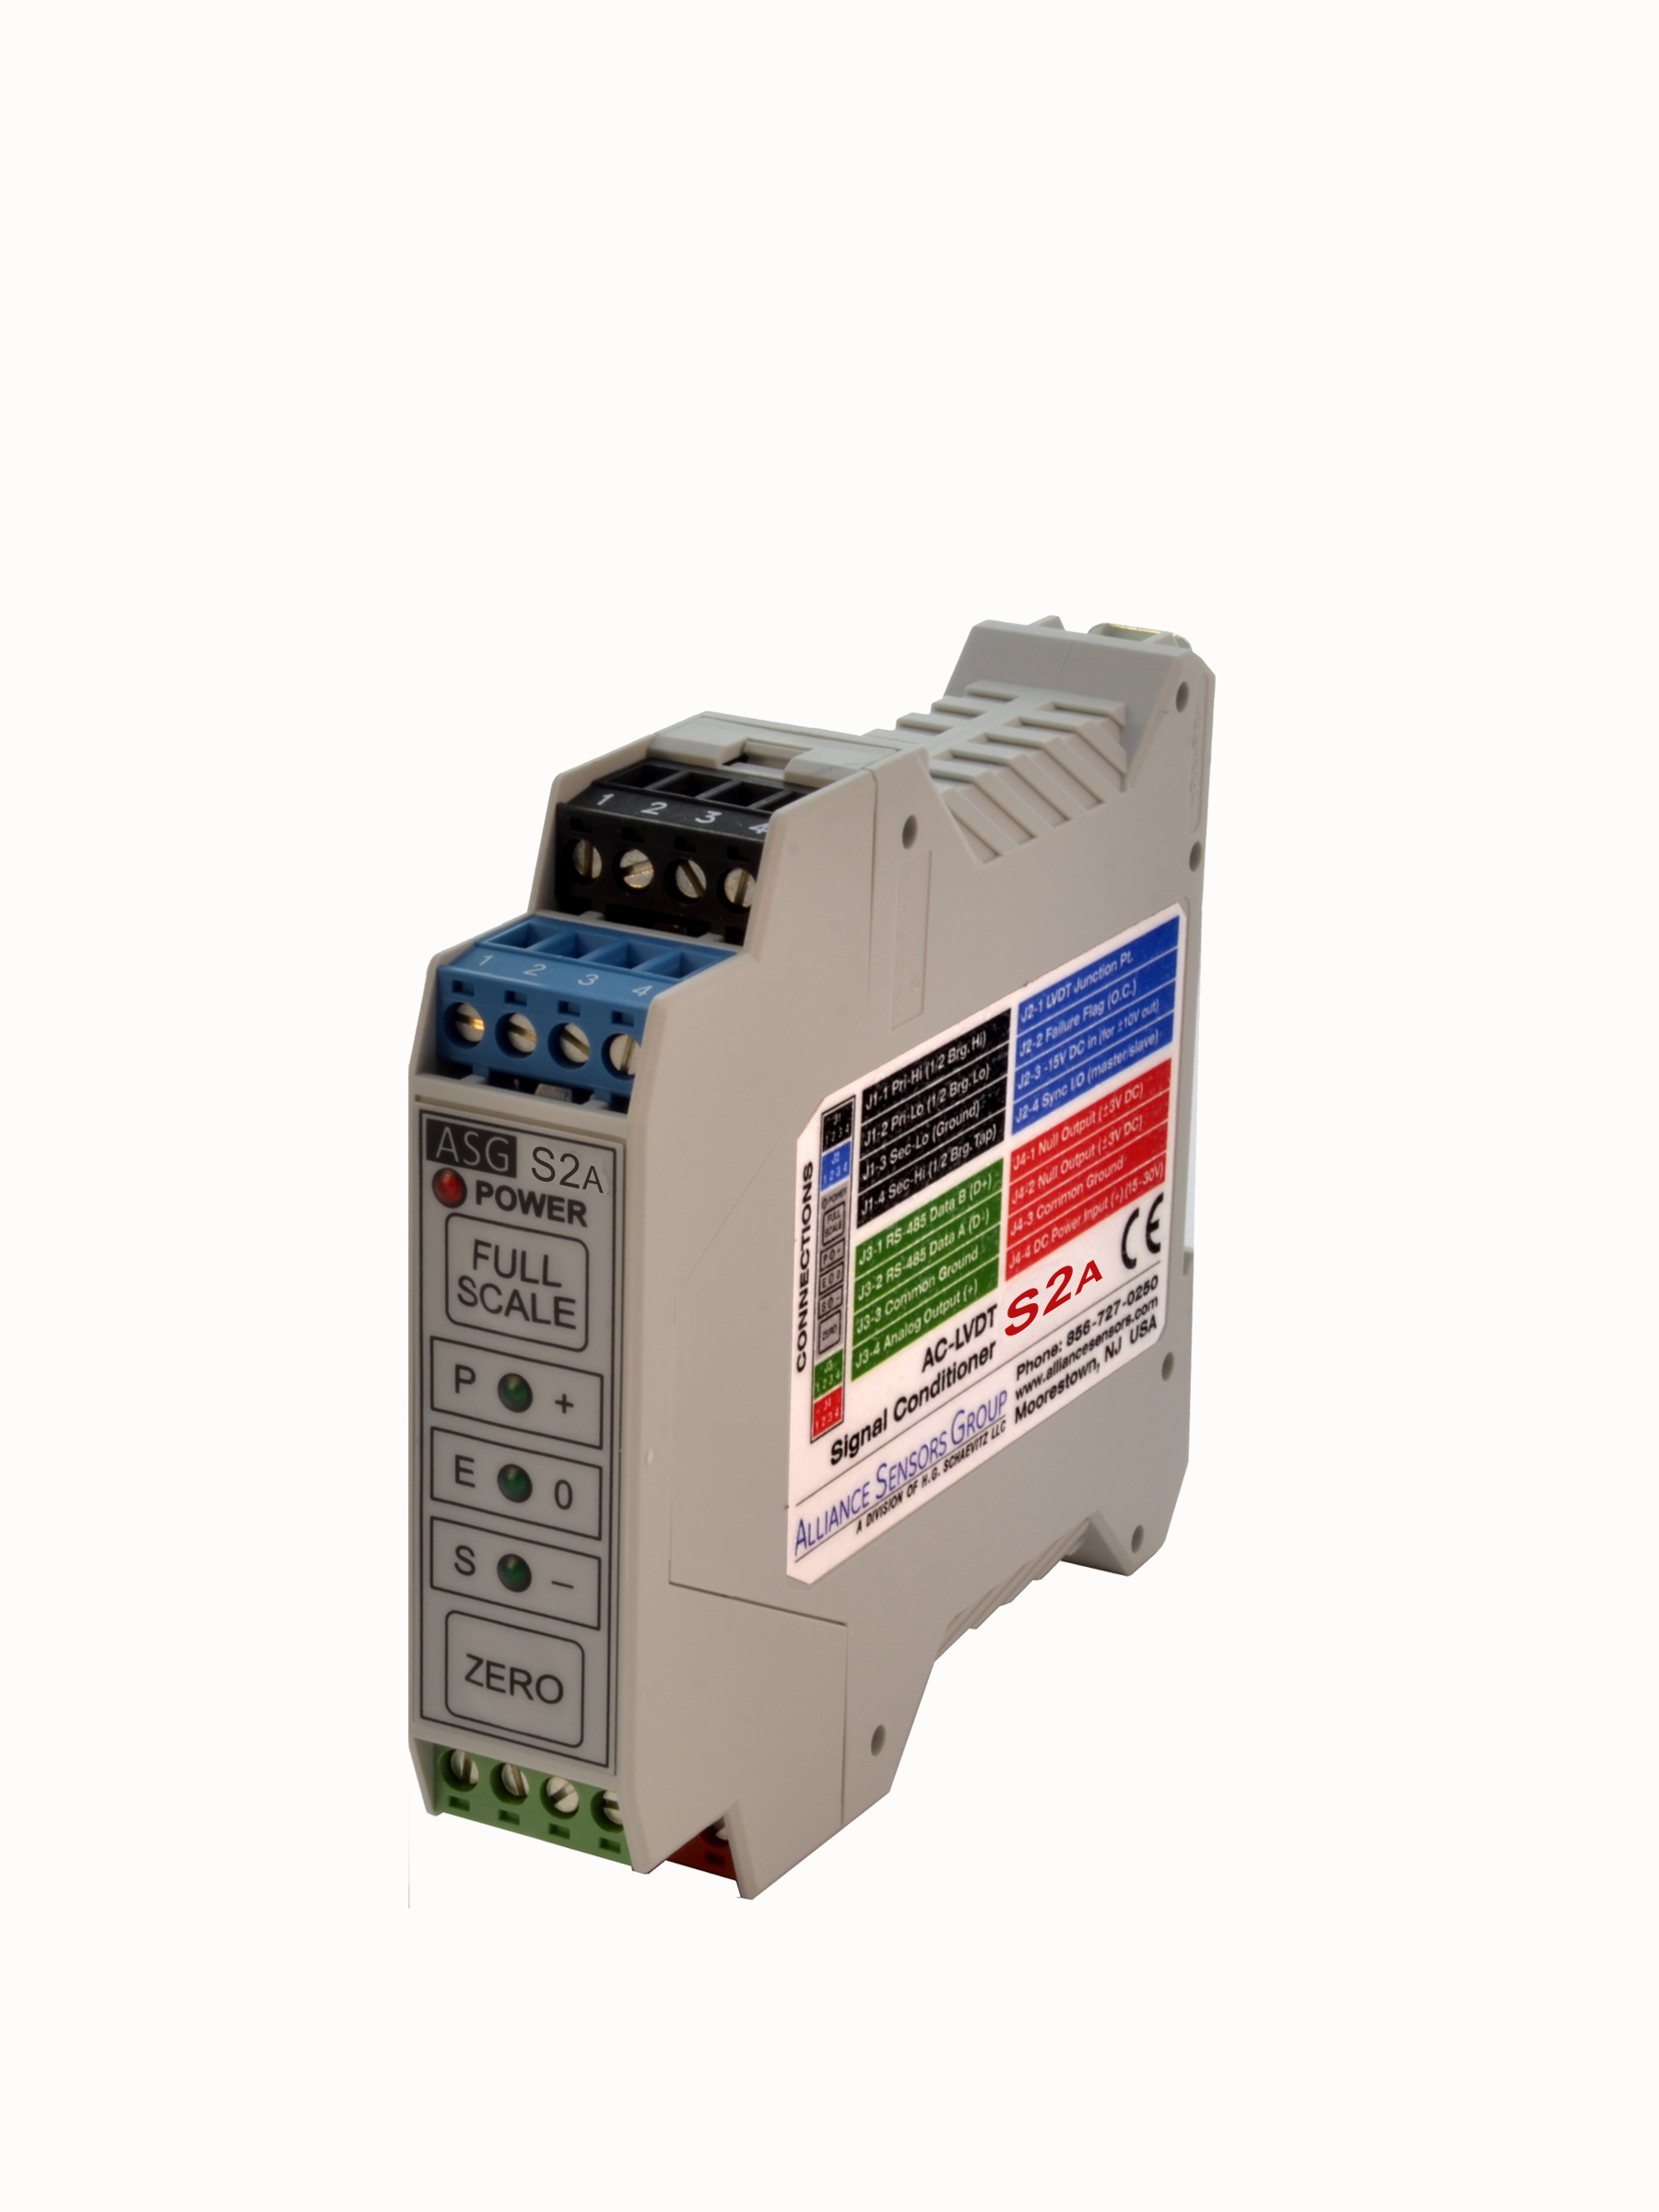 Alliance Sensors Group LVDT signal conditioner S2A  An LVDT signal conditioner